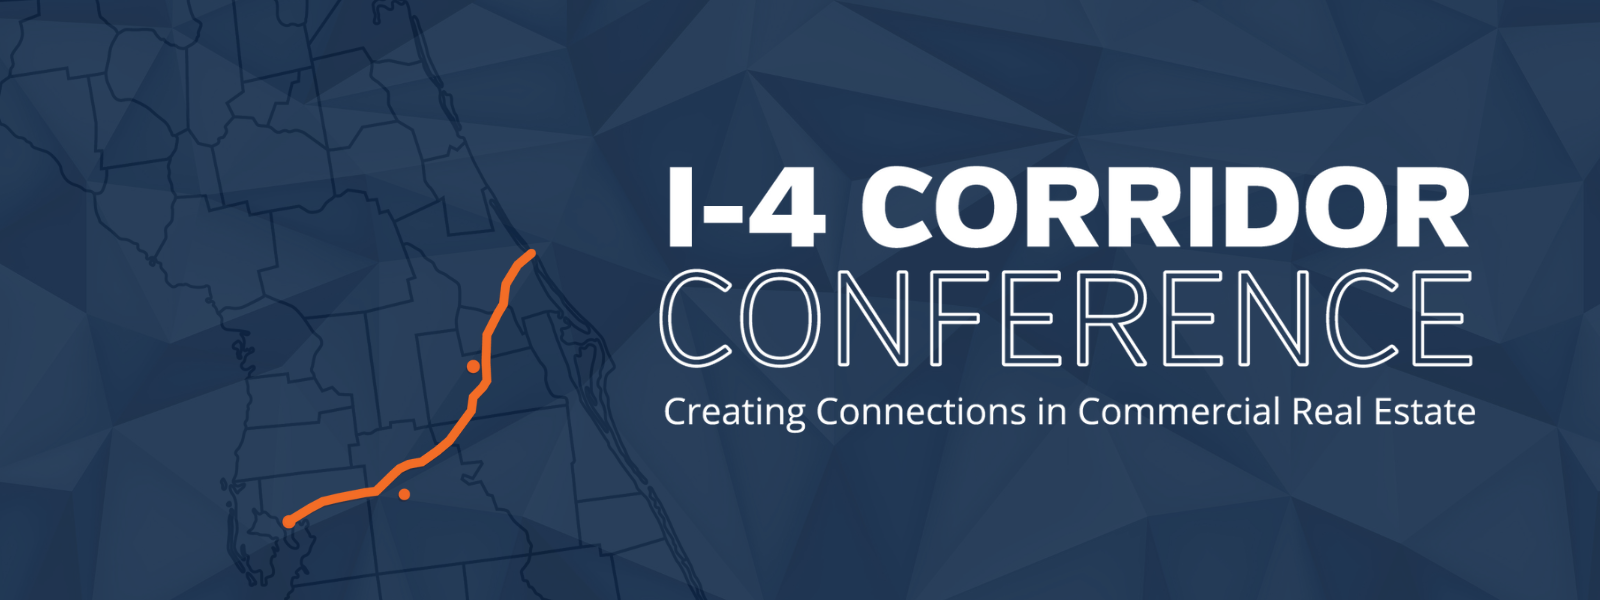 i4 corridor conference in florida